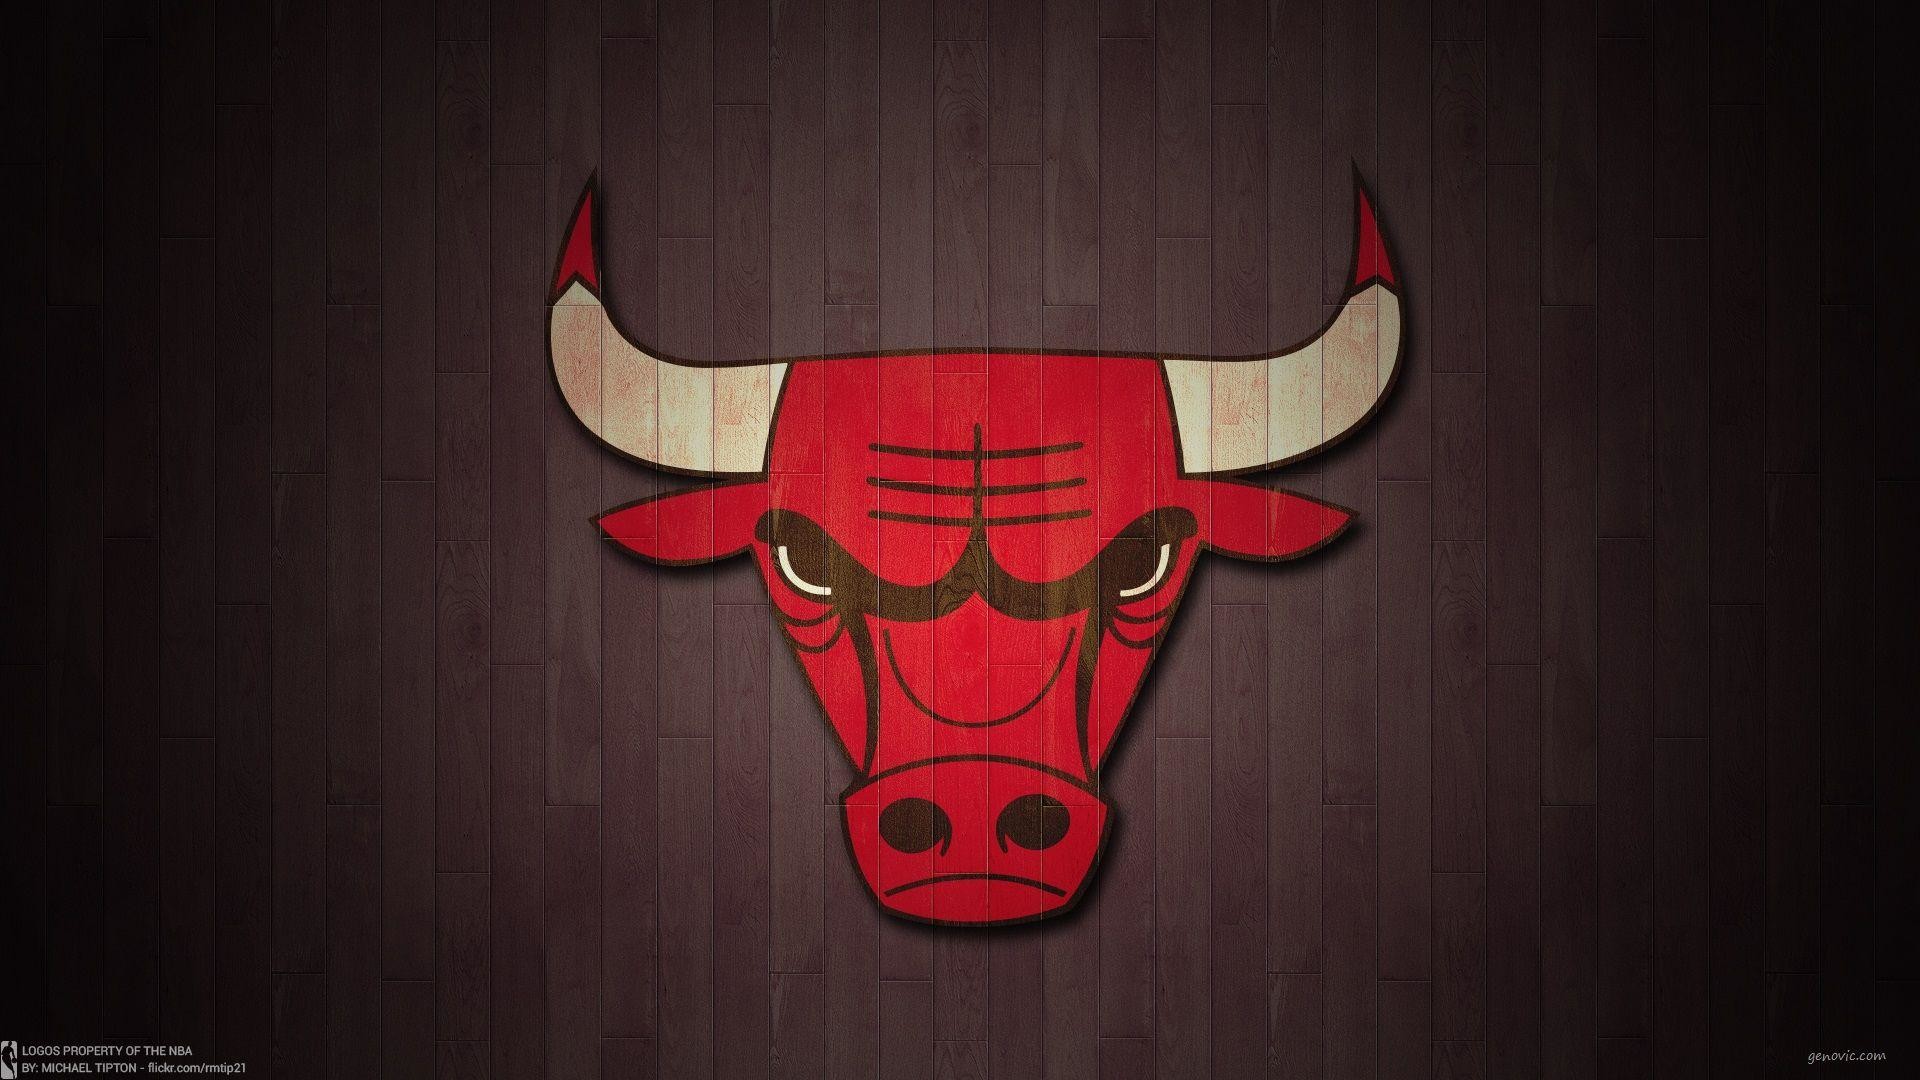 1920x1080 Chicago Bulls Logo Wallpaper HD for iPhone, Laptop, iPad, Mobile .